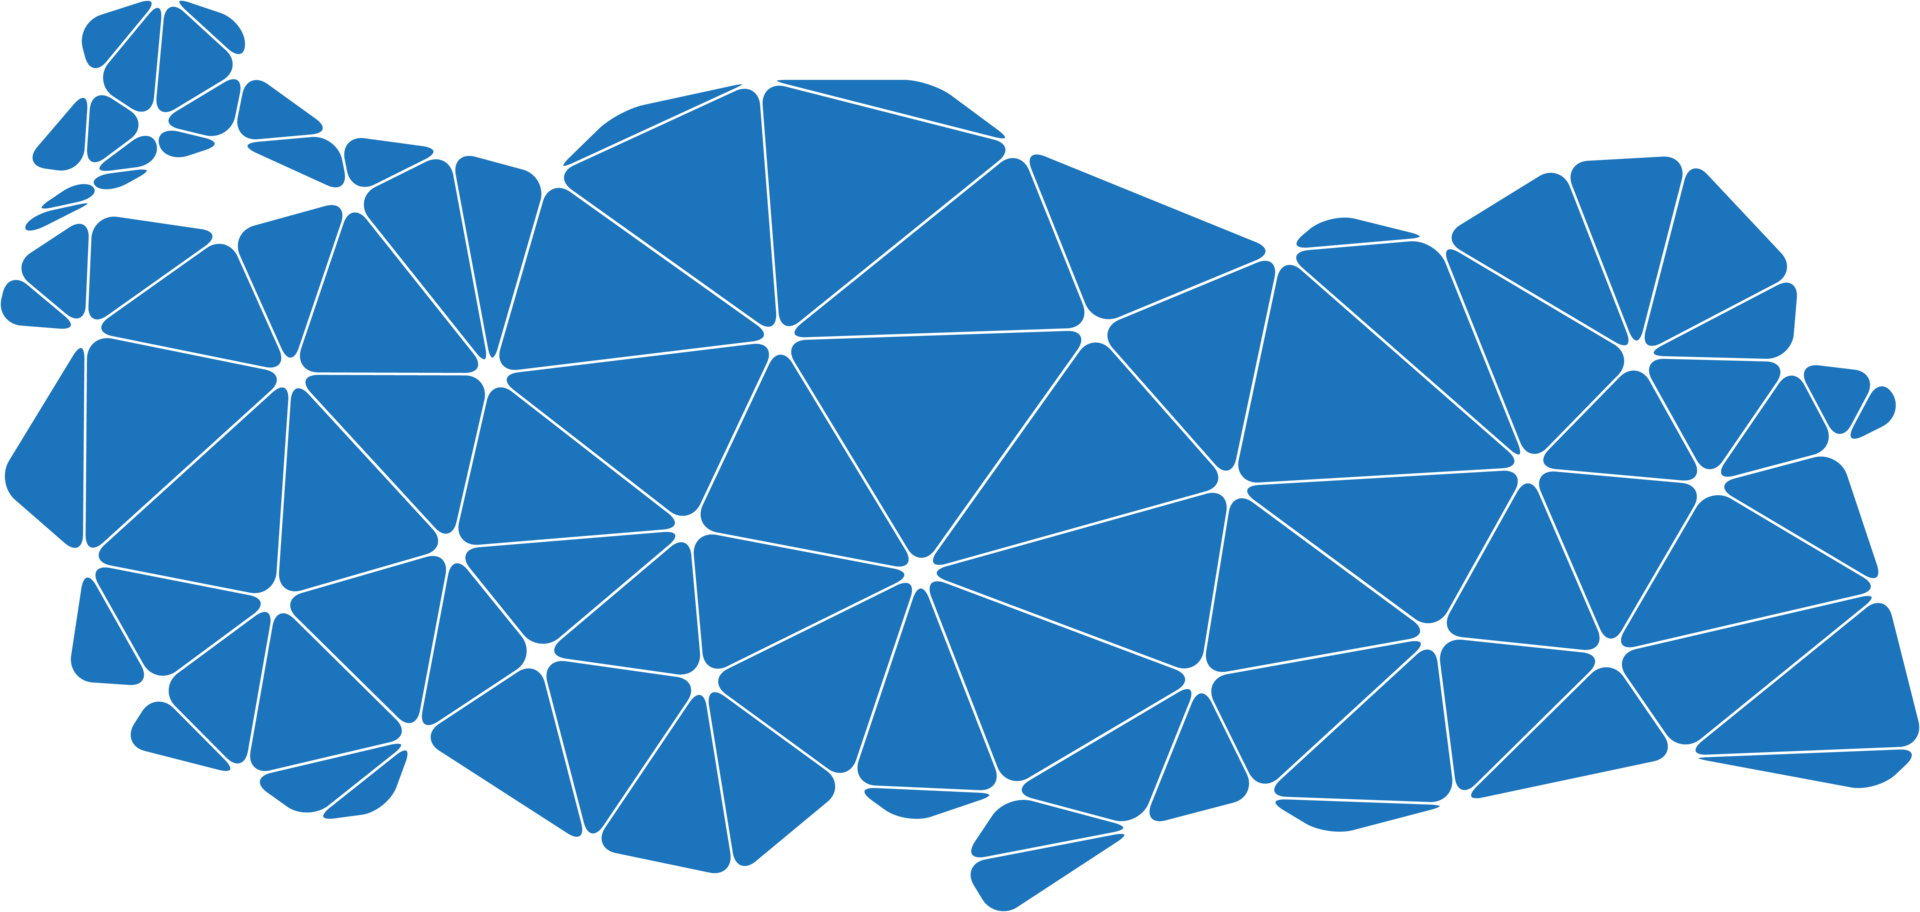 mapa de peru poligonal. png